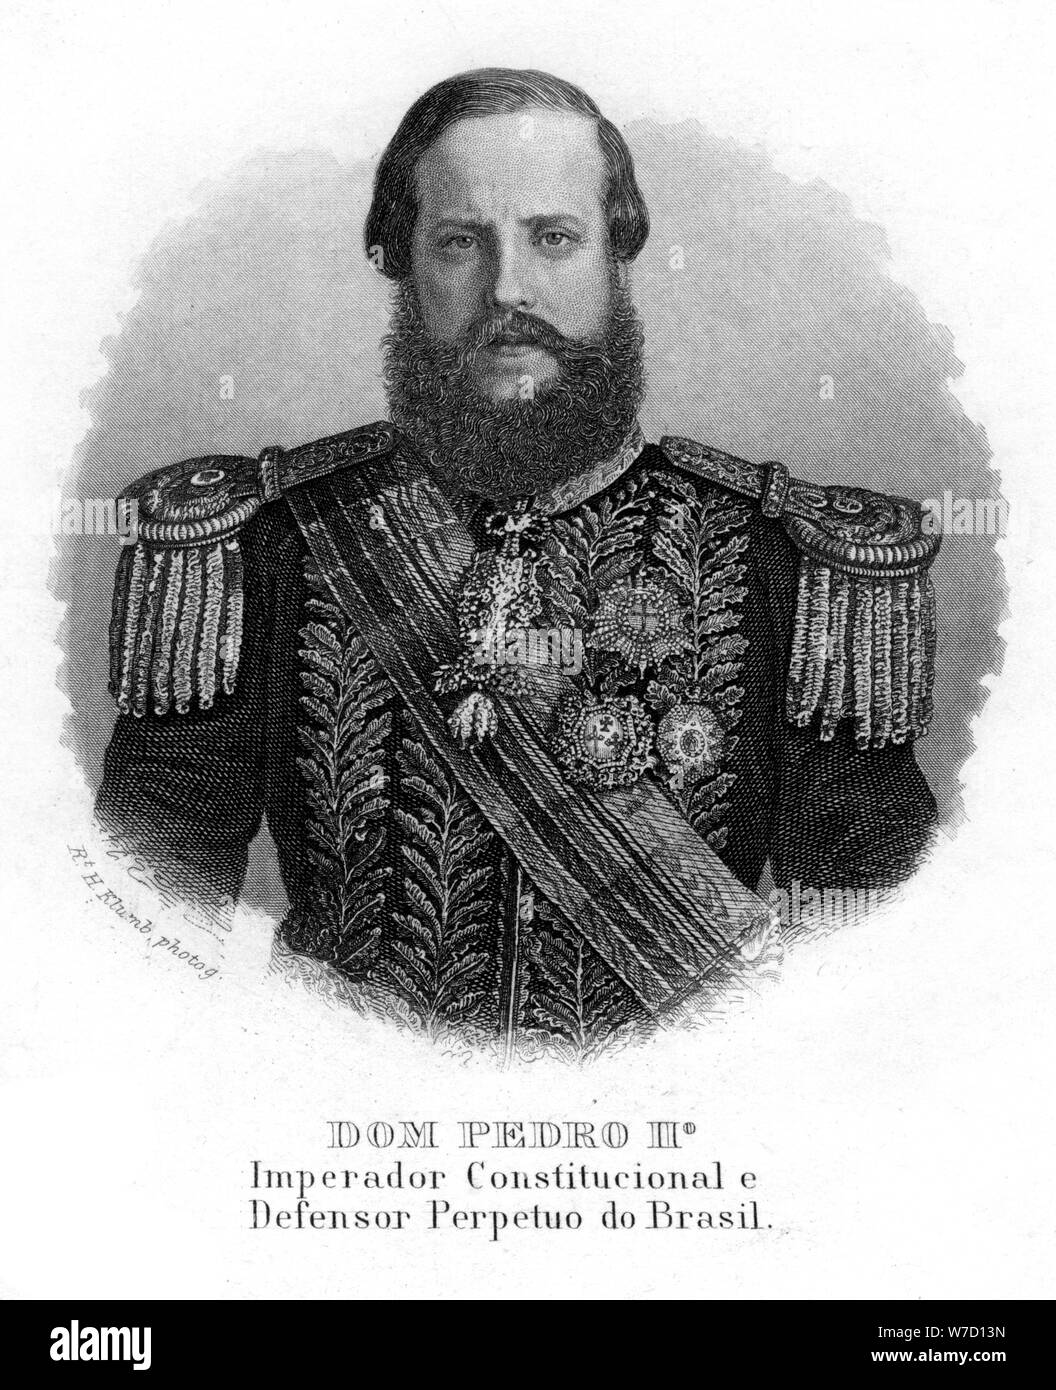 Pedro II of Brazil, Emperor of Brazil, 19th century.Artist: R H Klumb Stock Photo